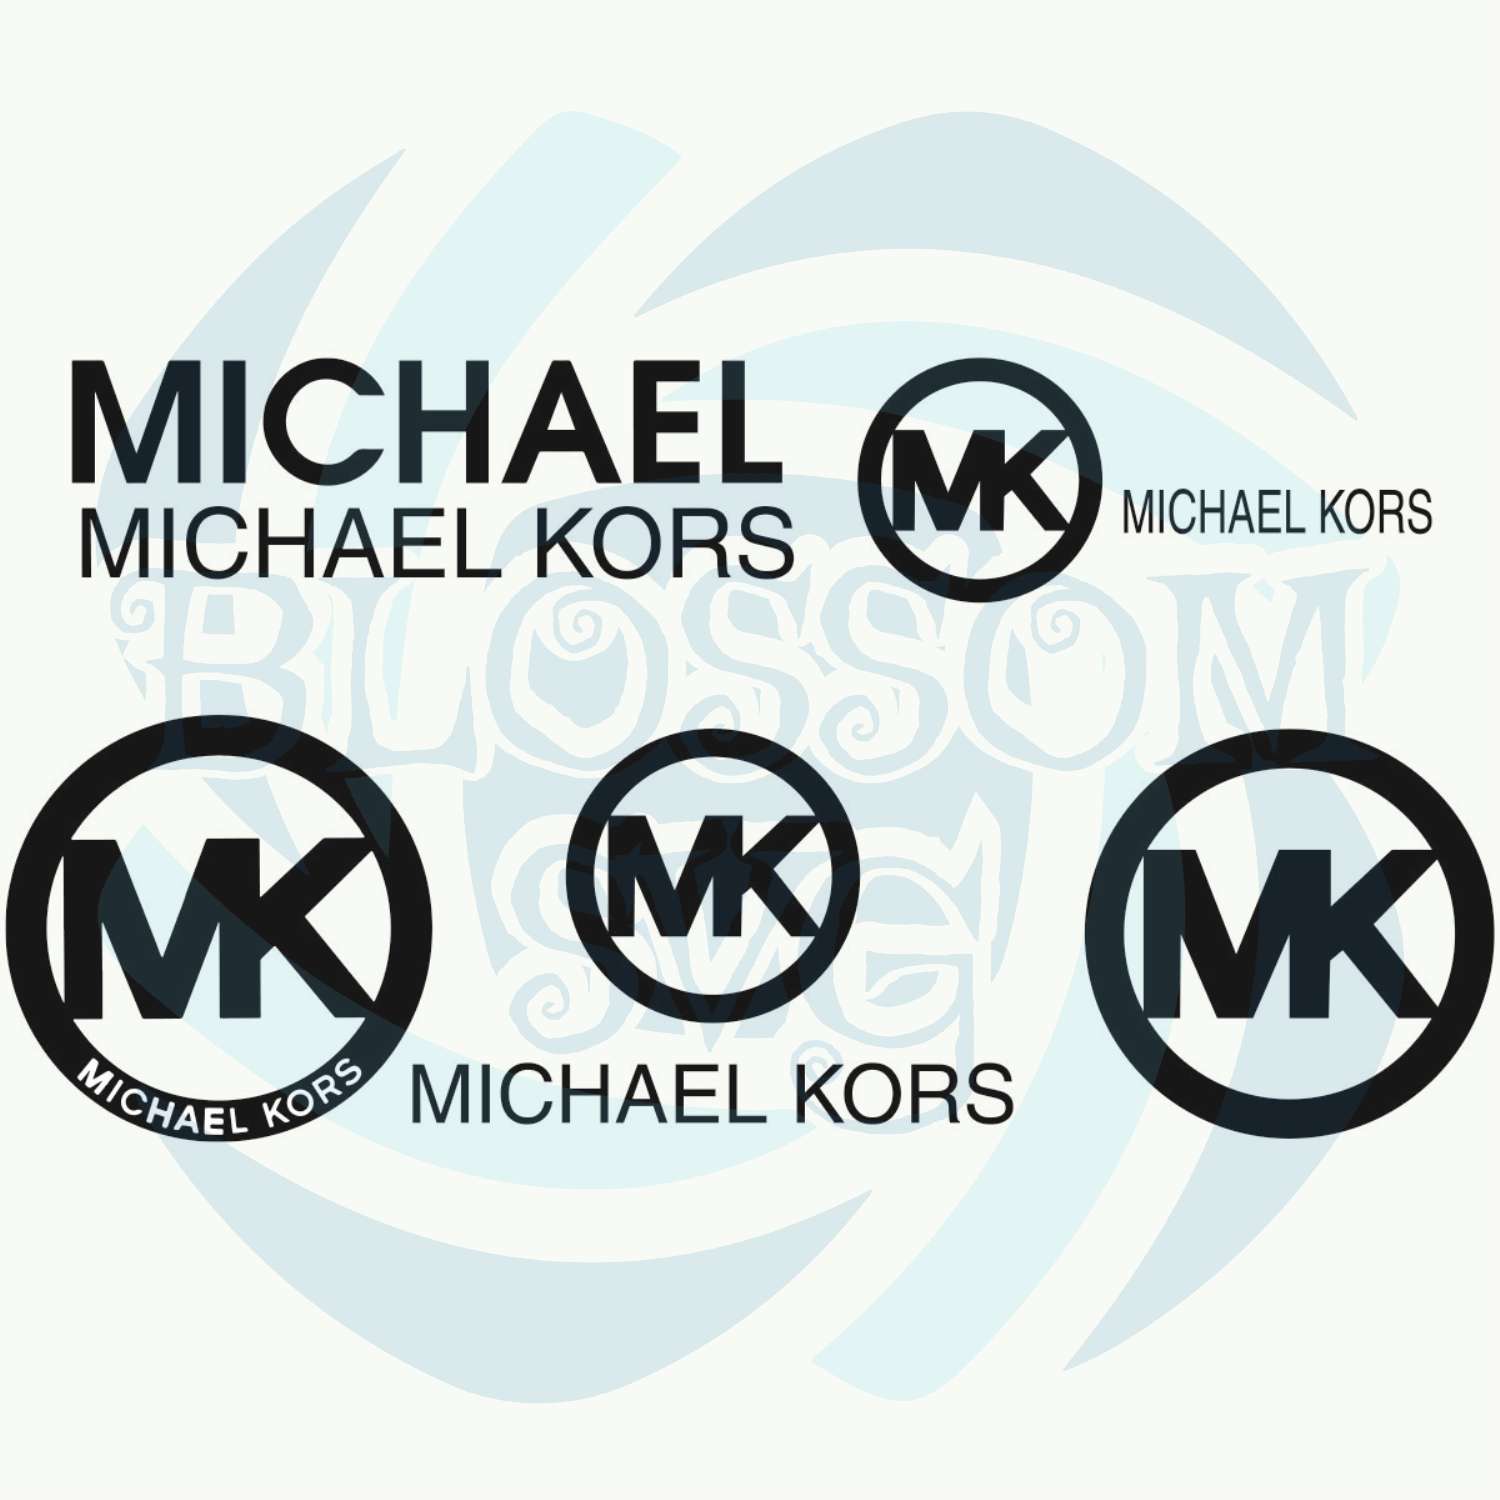 Michael Kors Logo , symbol, meaning, history, PNG, brand